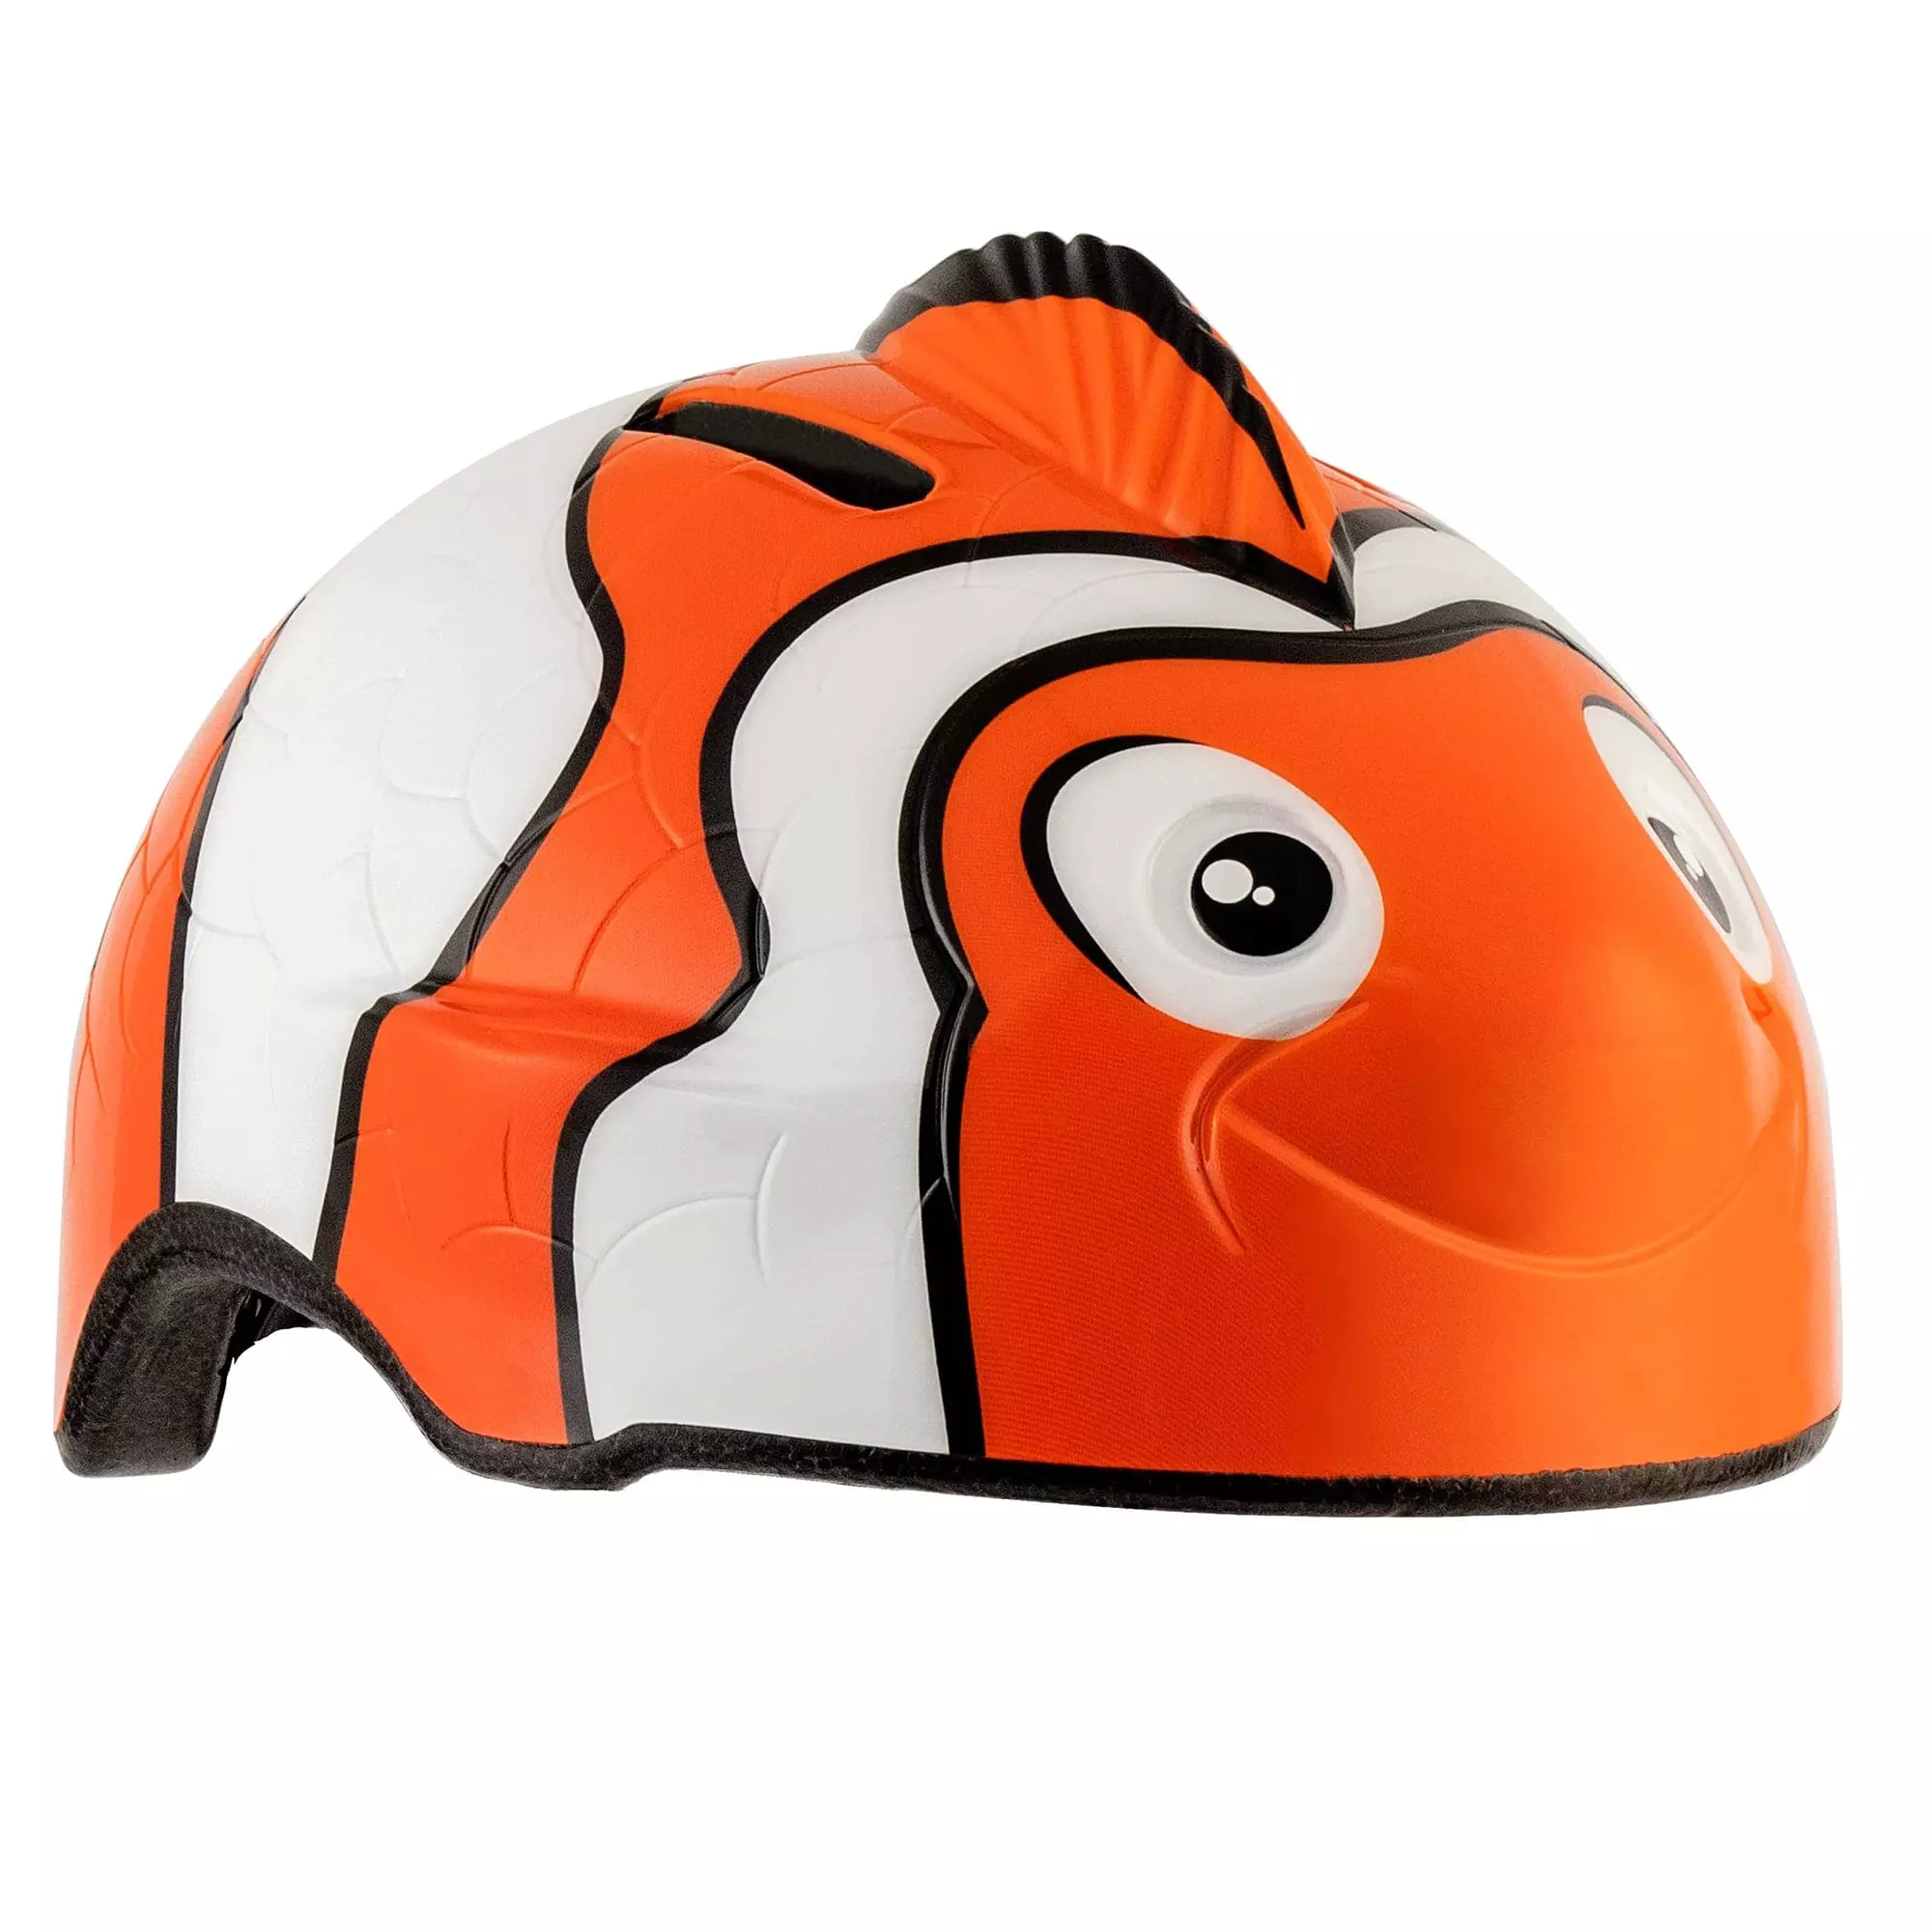 Crazy Safety Fish Bicycle Helmet Orange